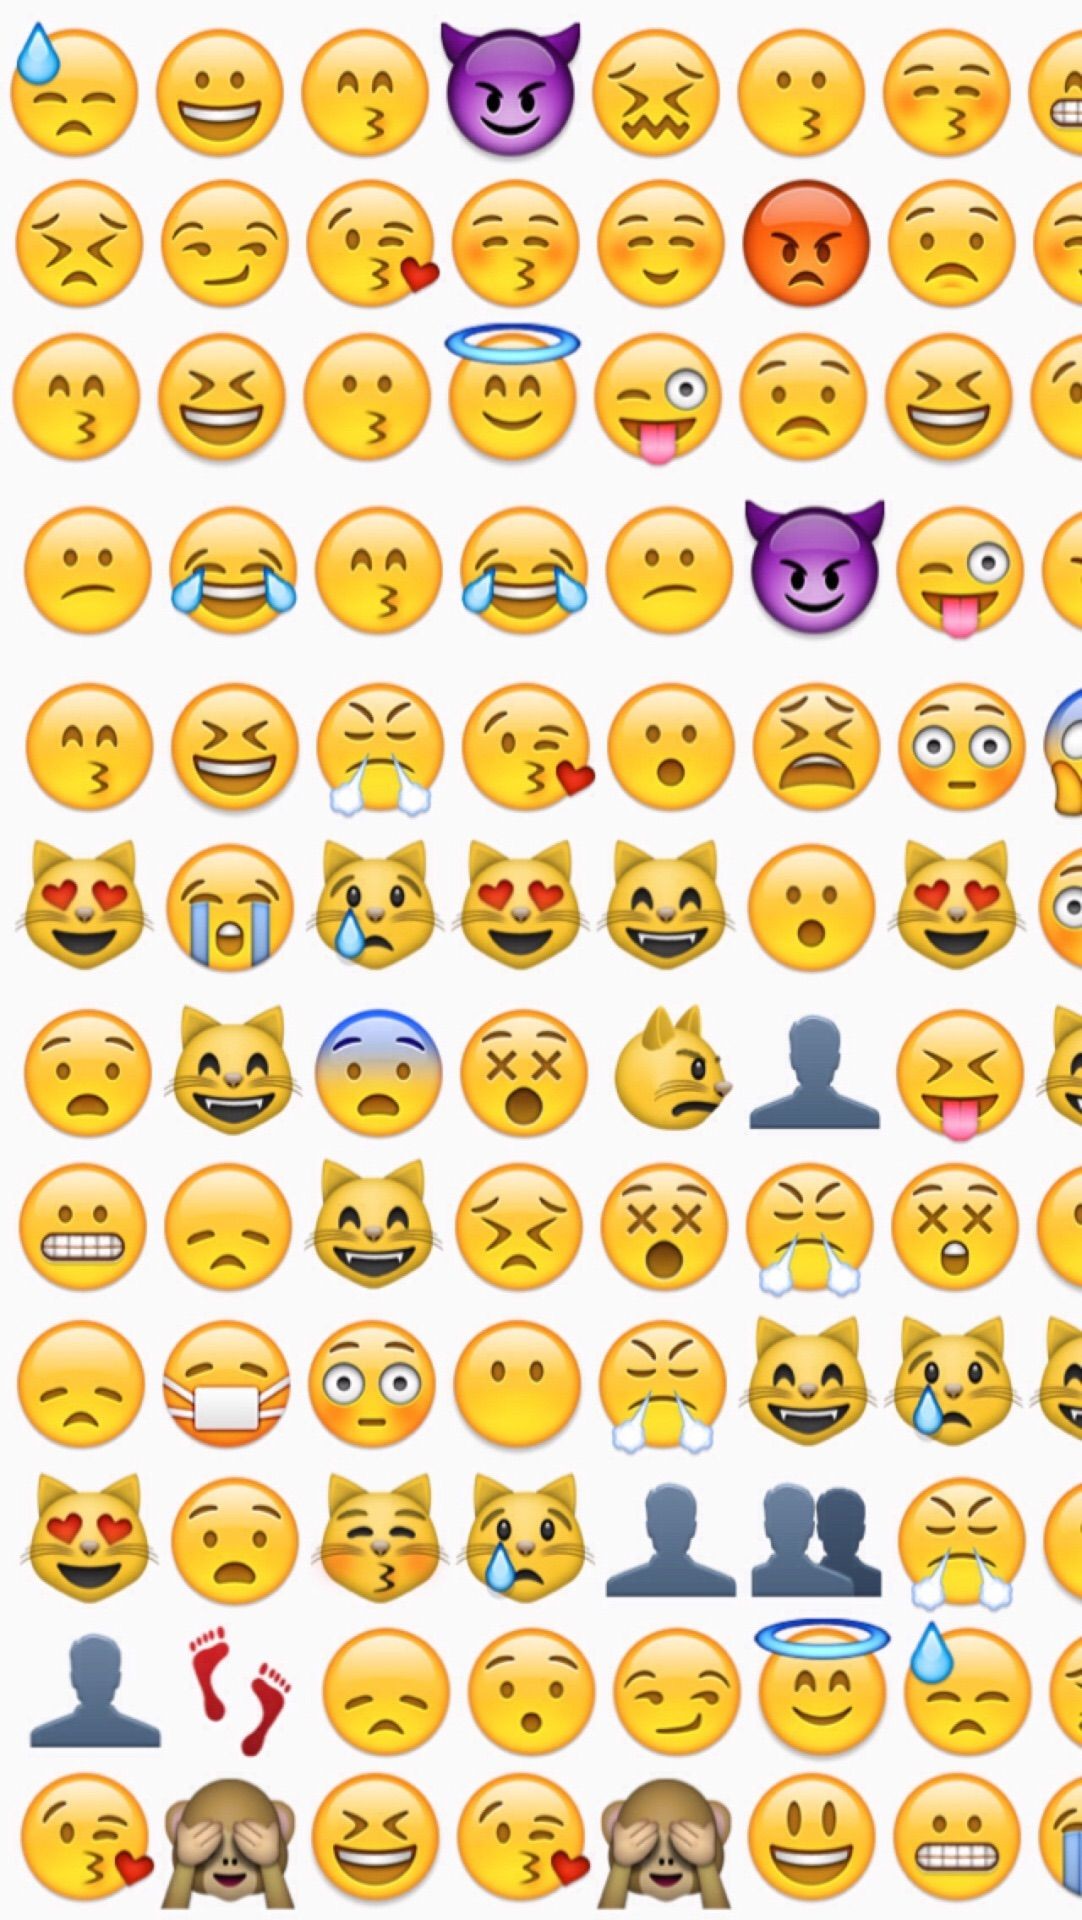 Emojis Wallpaper iPhone Icons (60+ images)